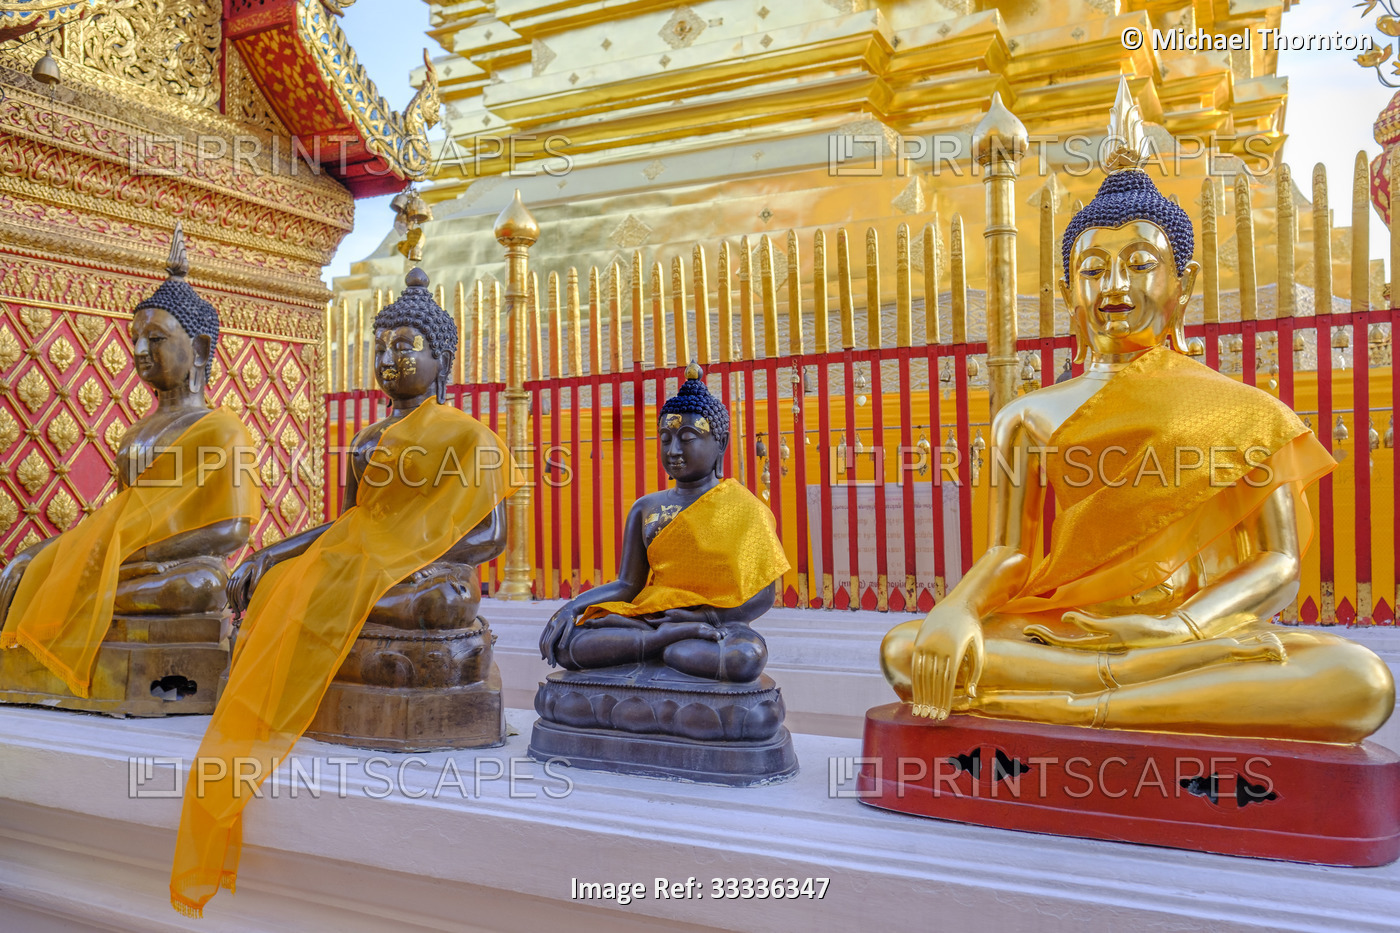 Wat Phra That Doi Suthep, Chiang Mai, Thailand.